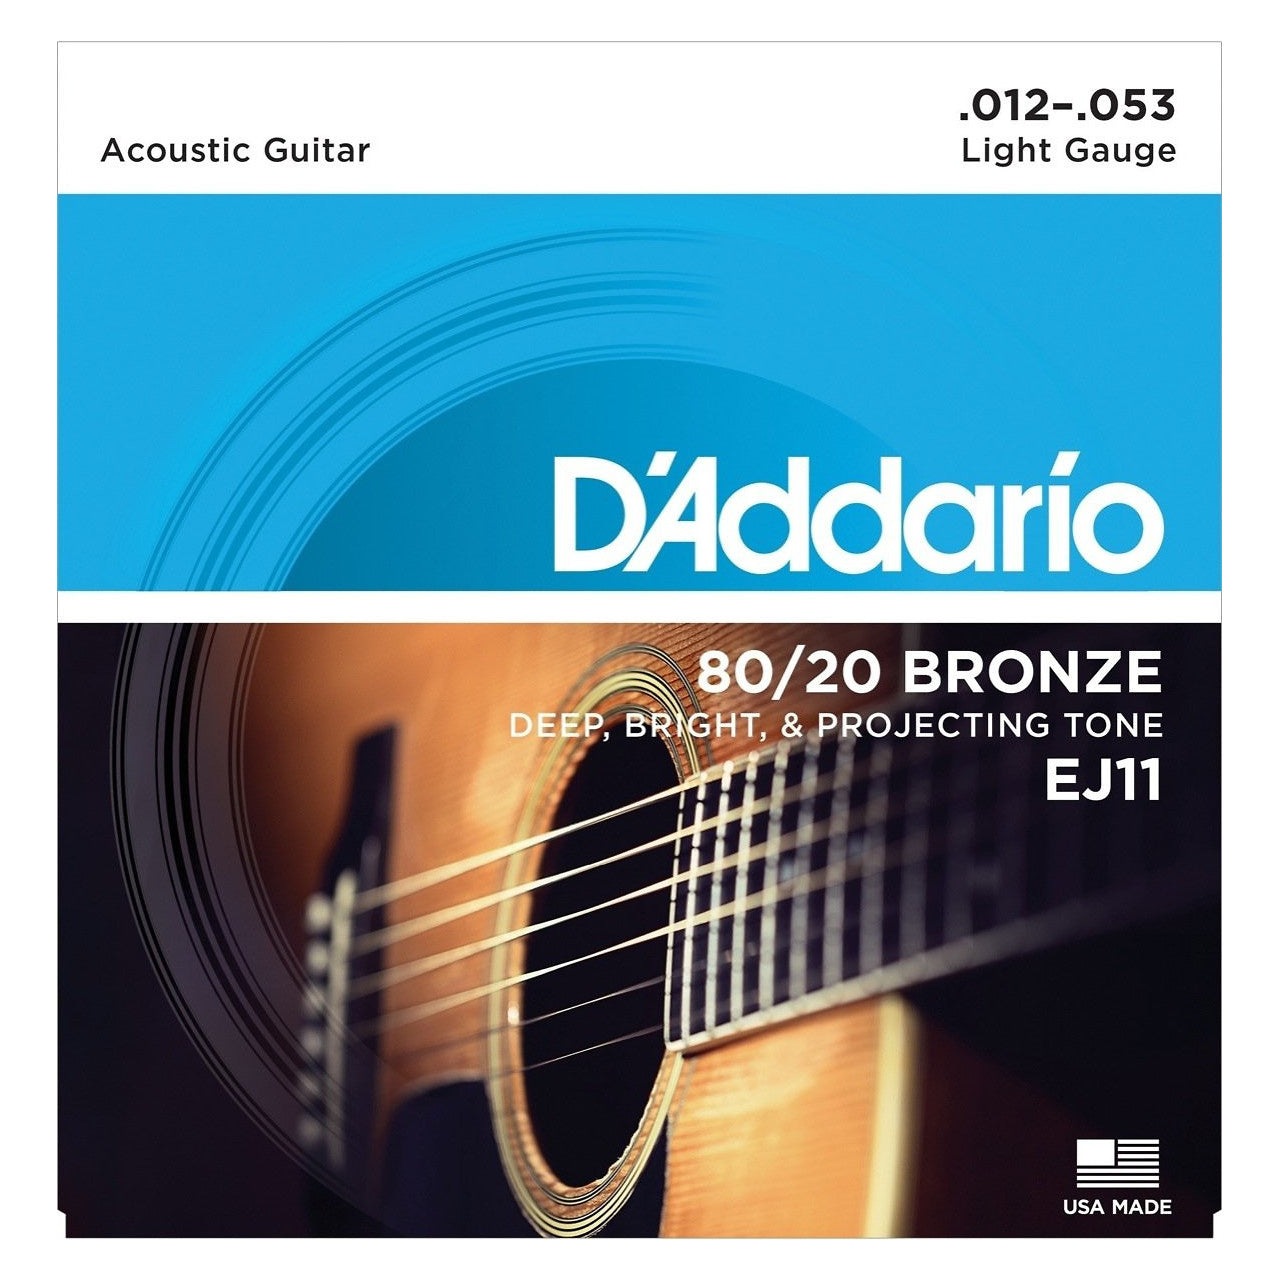 D'Addario 80/20 Bronze Acoustic Guitar Strings, EJ11, Light, 12-53